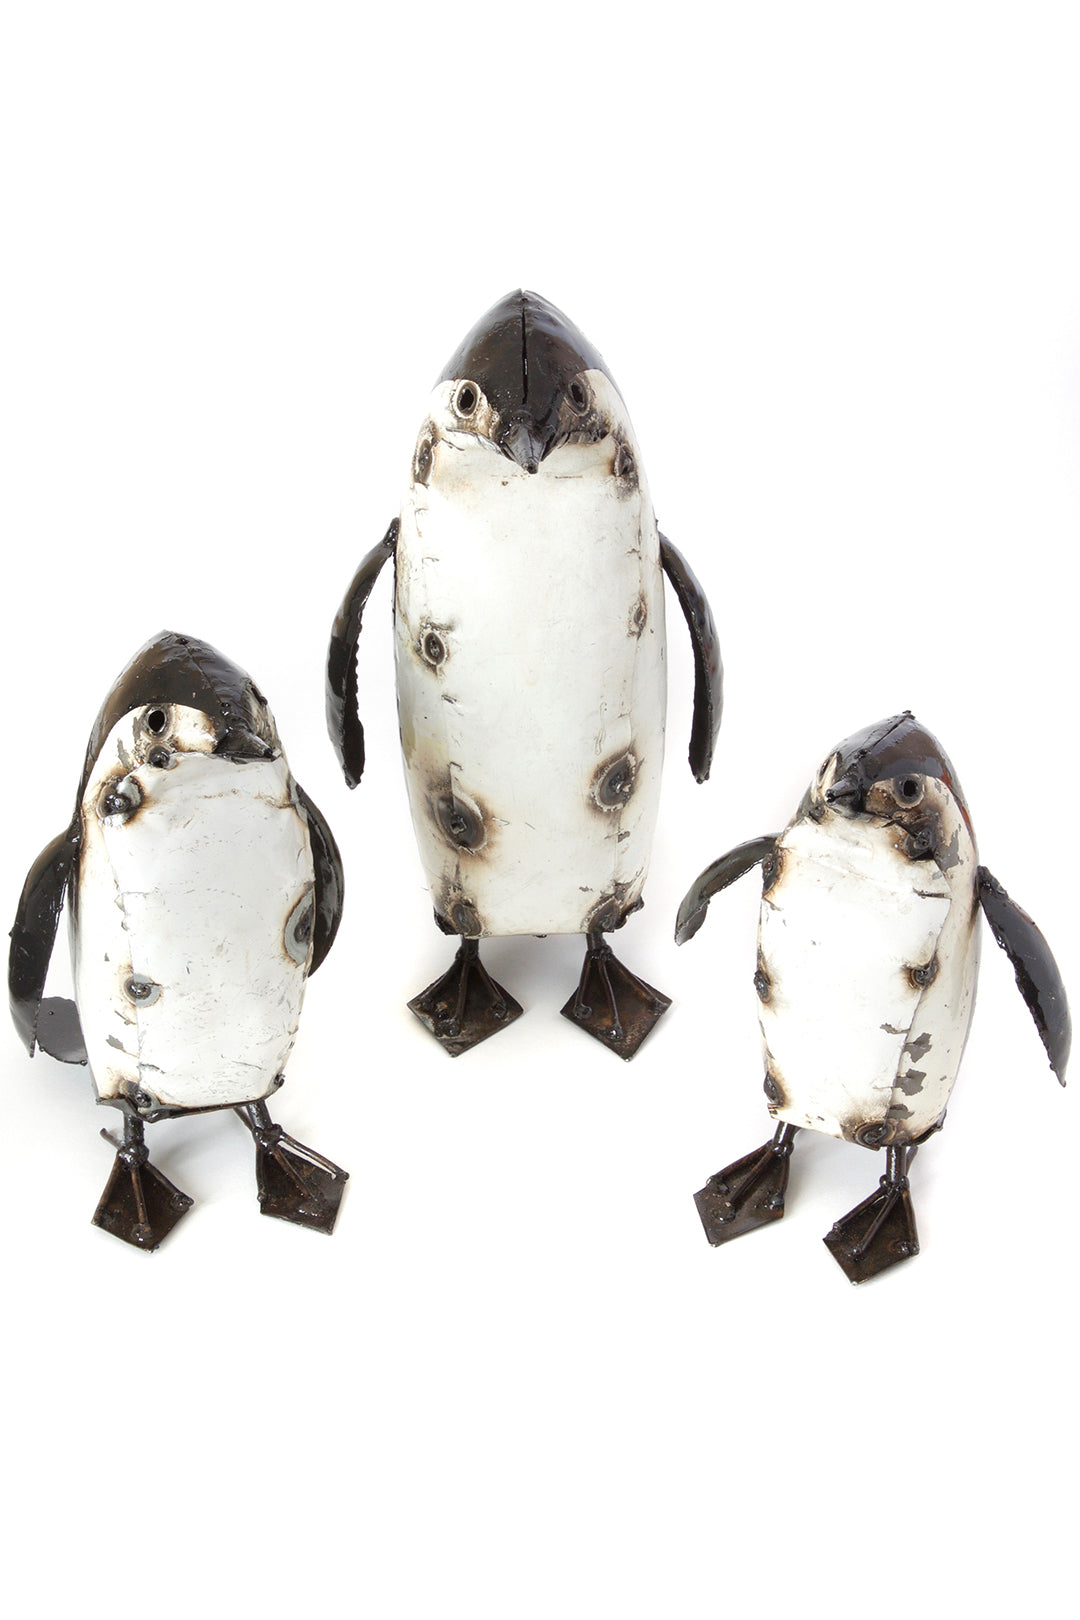 Penguin Pals Oil Drum Sculptures Small Penguin Sculpture